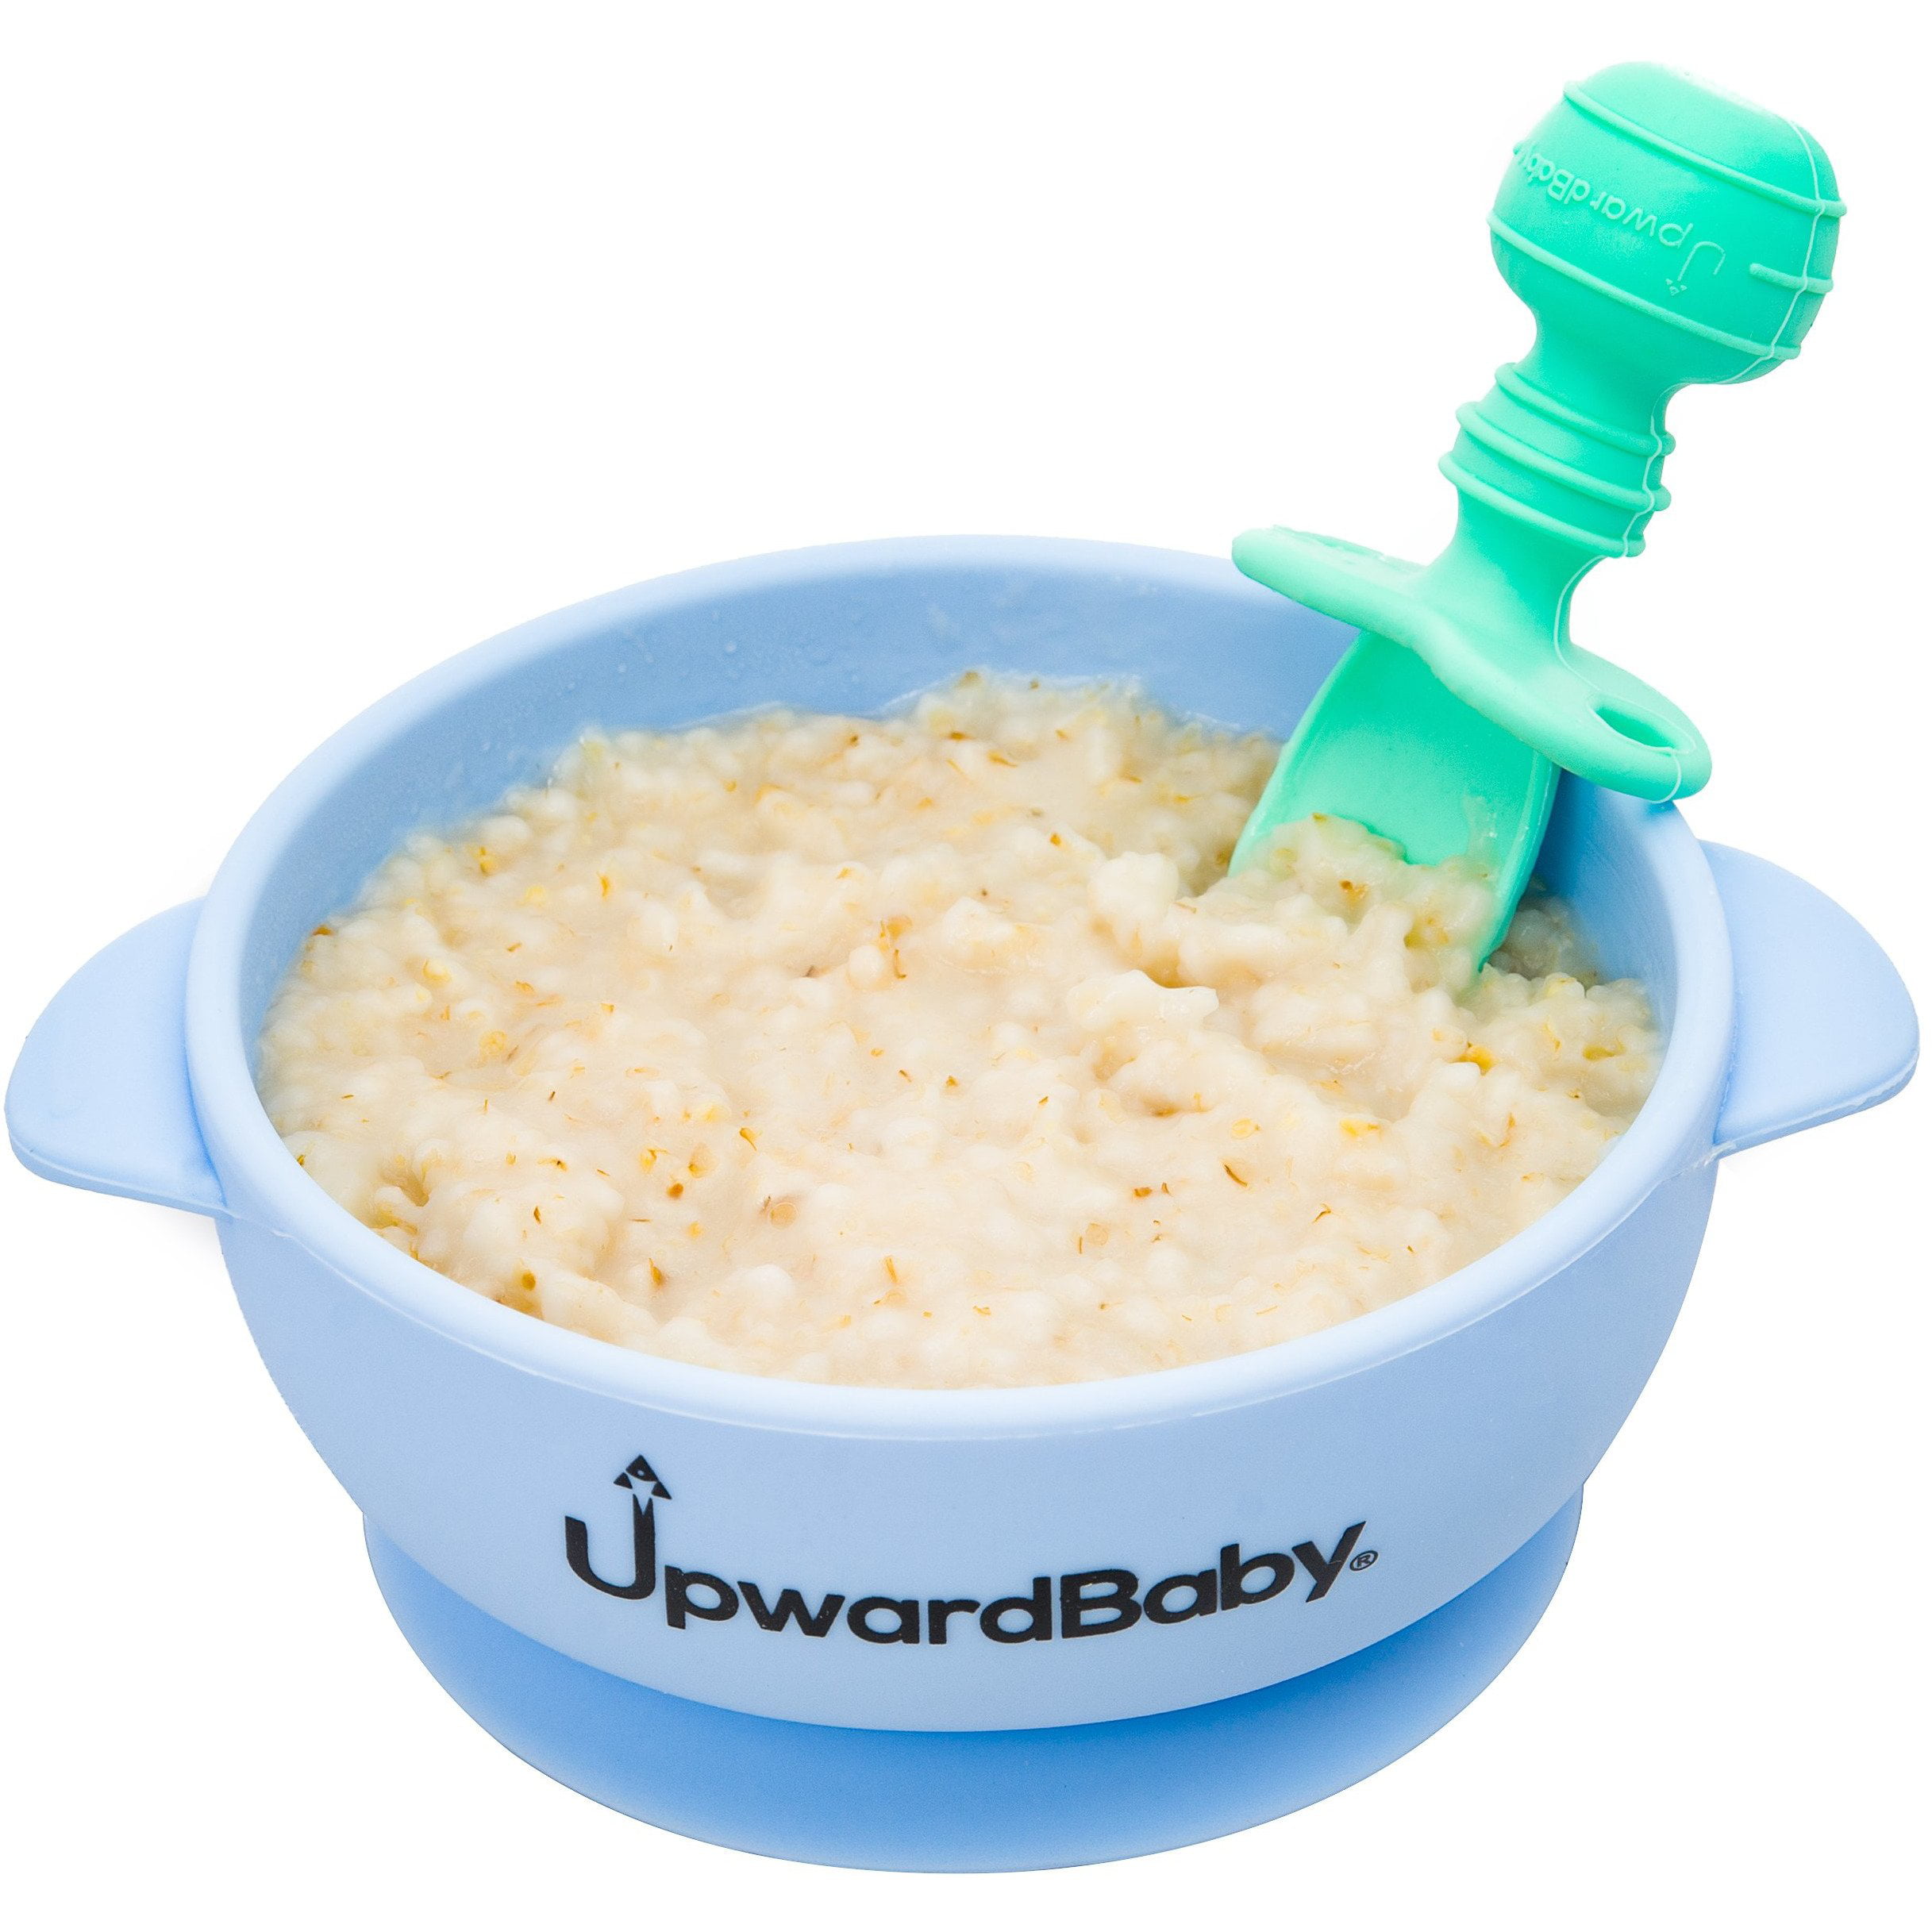 UpwardBaby Upward Baby 3 pack Silicone Baby Feeding Spoon with Anti choke  Barrier - Baby Spoons Self